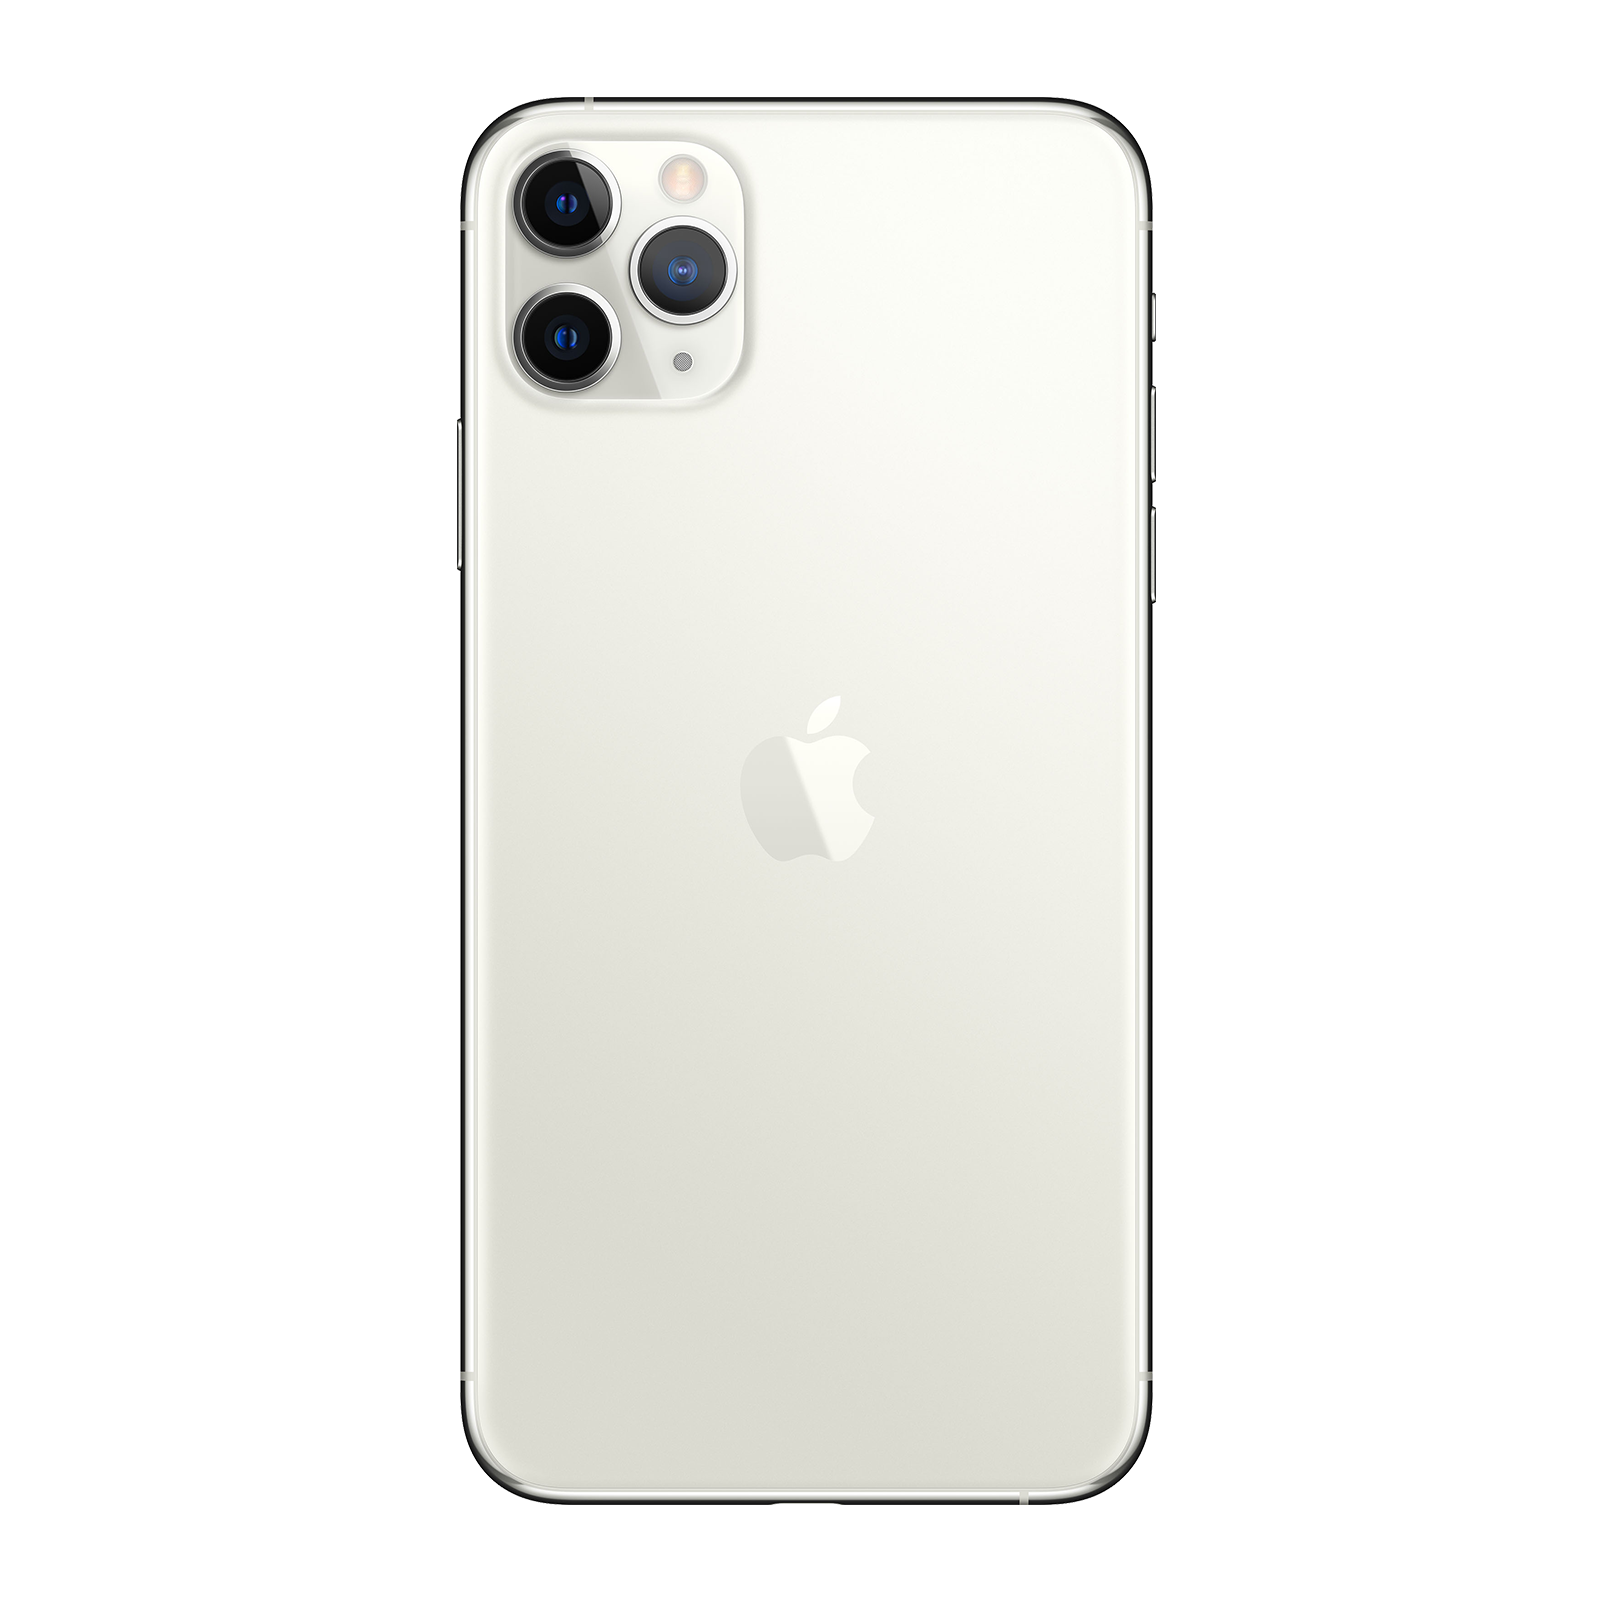 Apple iPhone 11 Pro 256GB Silver Fair - Sprint